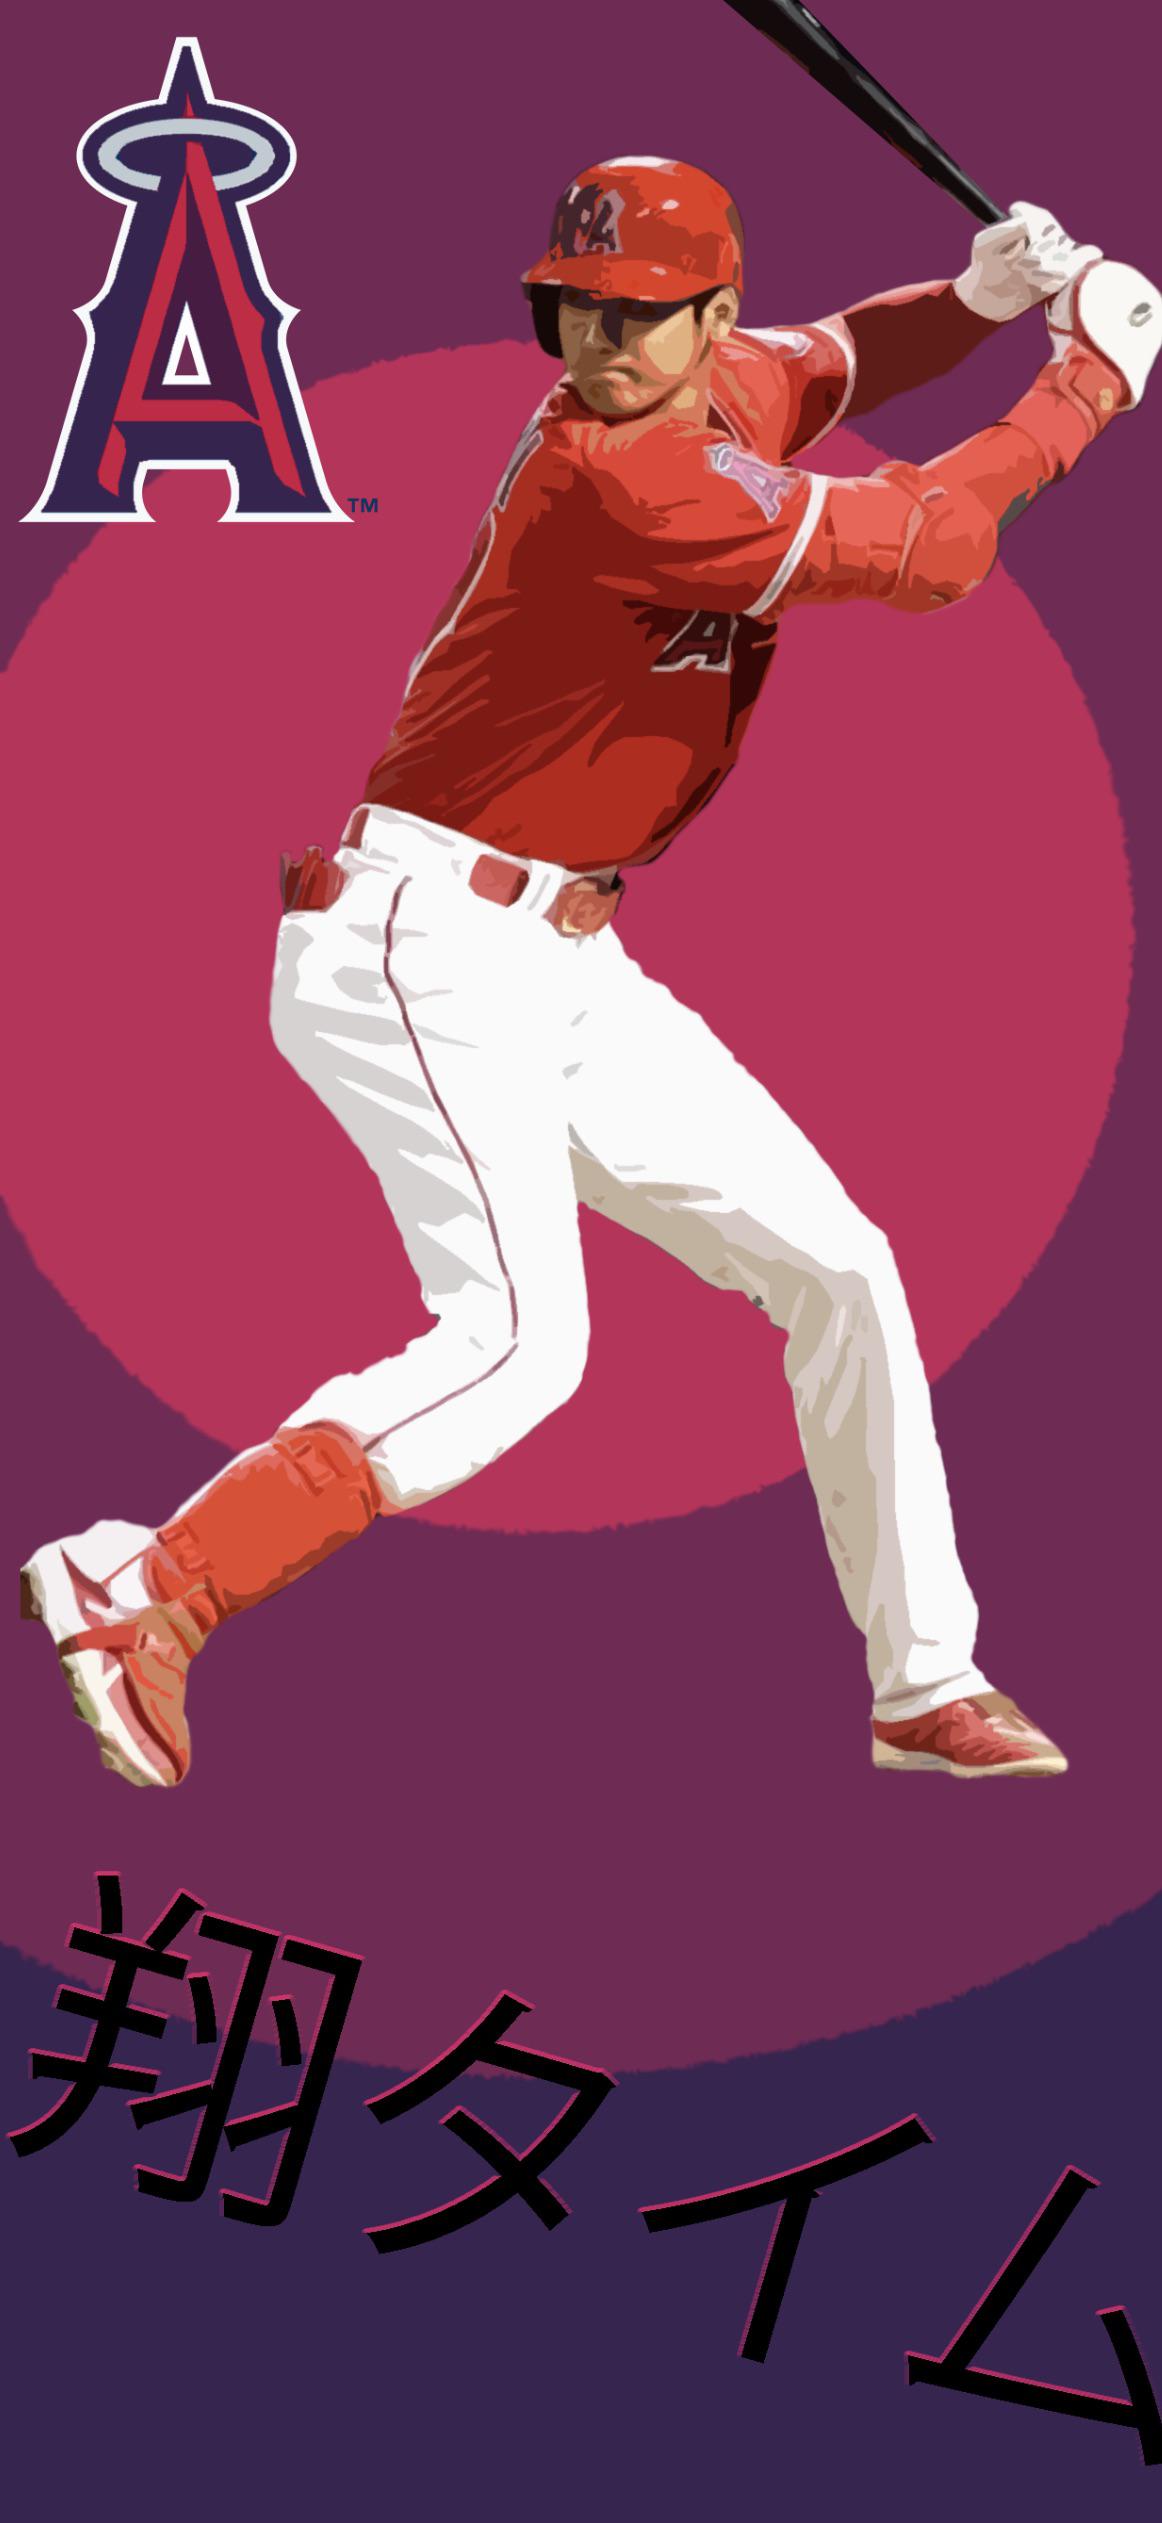 Wallpaper wallpaper sport logo baseball Los Angeles Angels images for  desktop section спорт  download